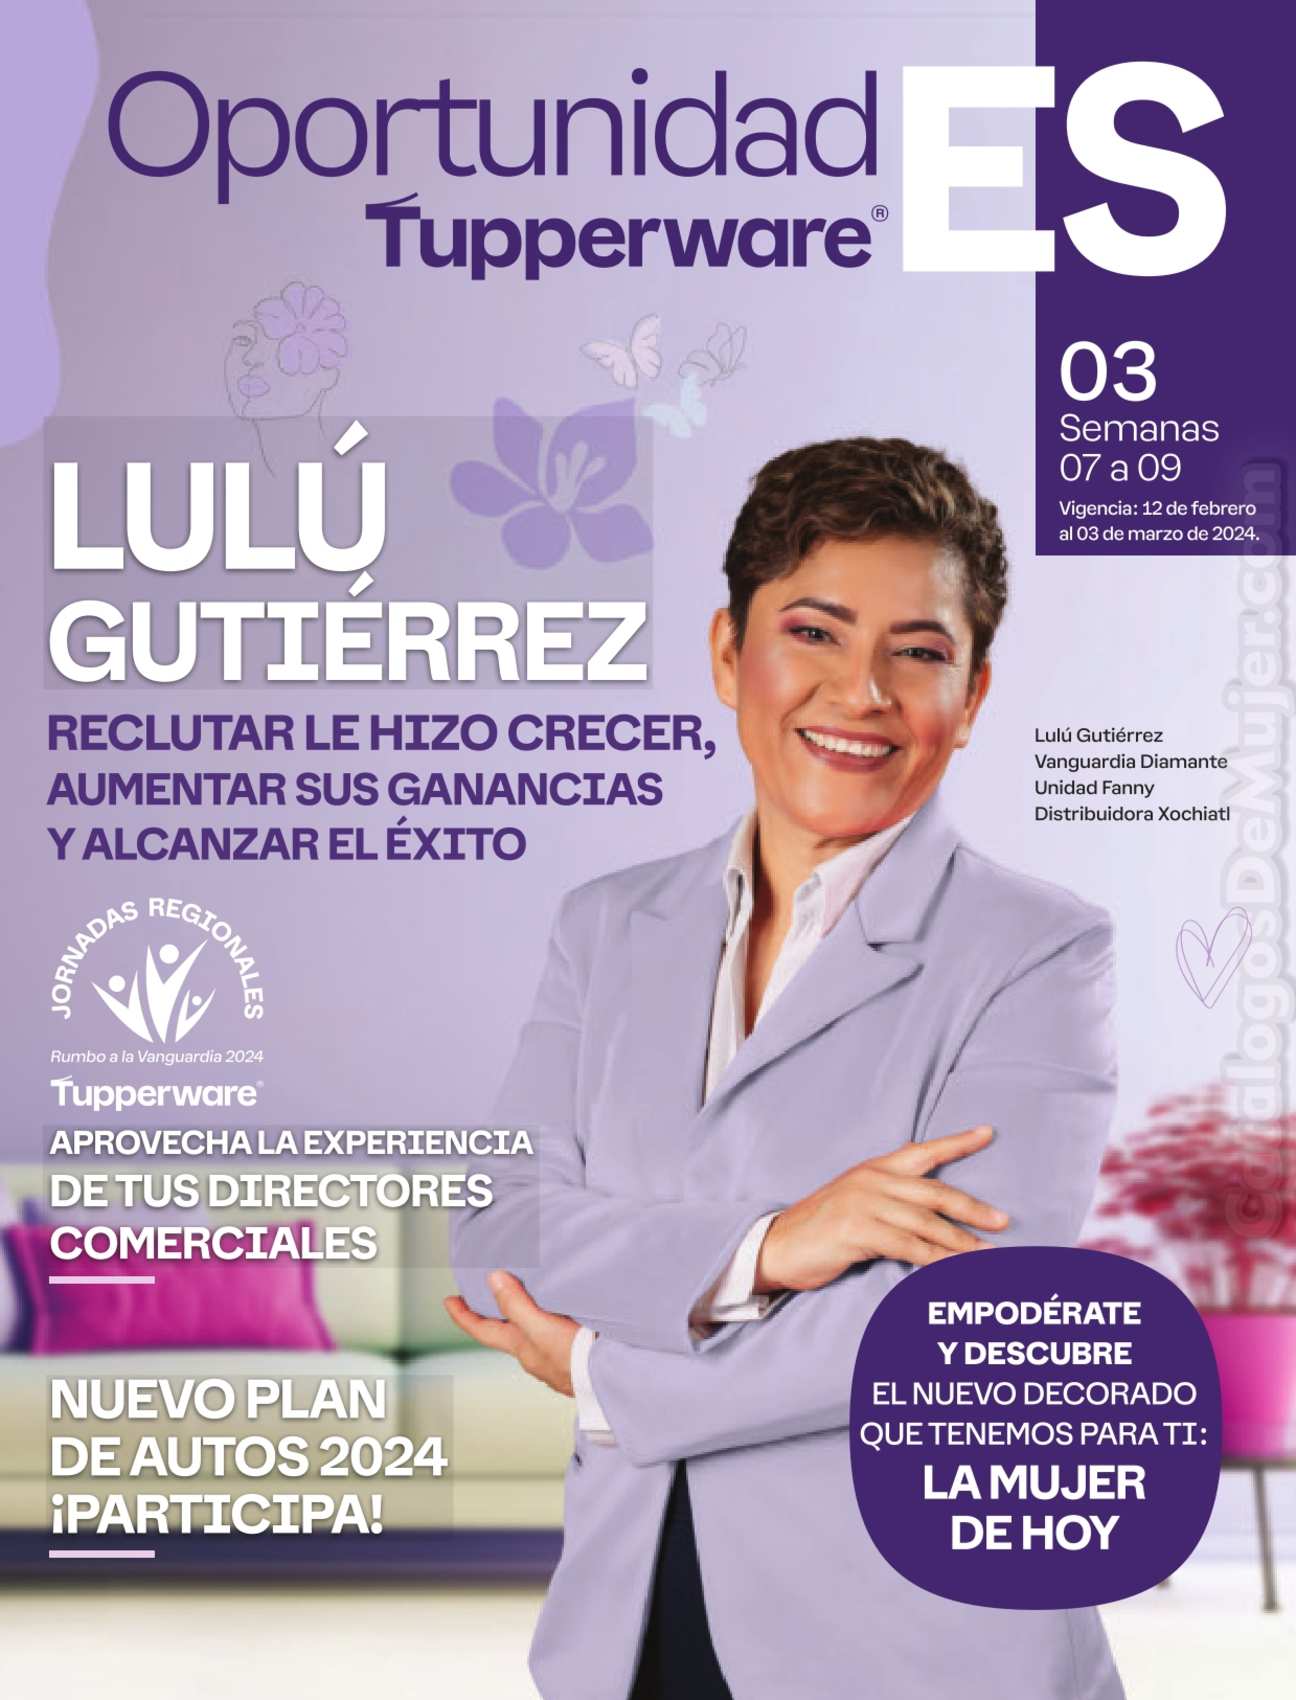 ᐈ Catalogo Tupperware Tupper Tips 4 2024 México